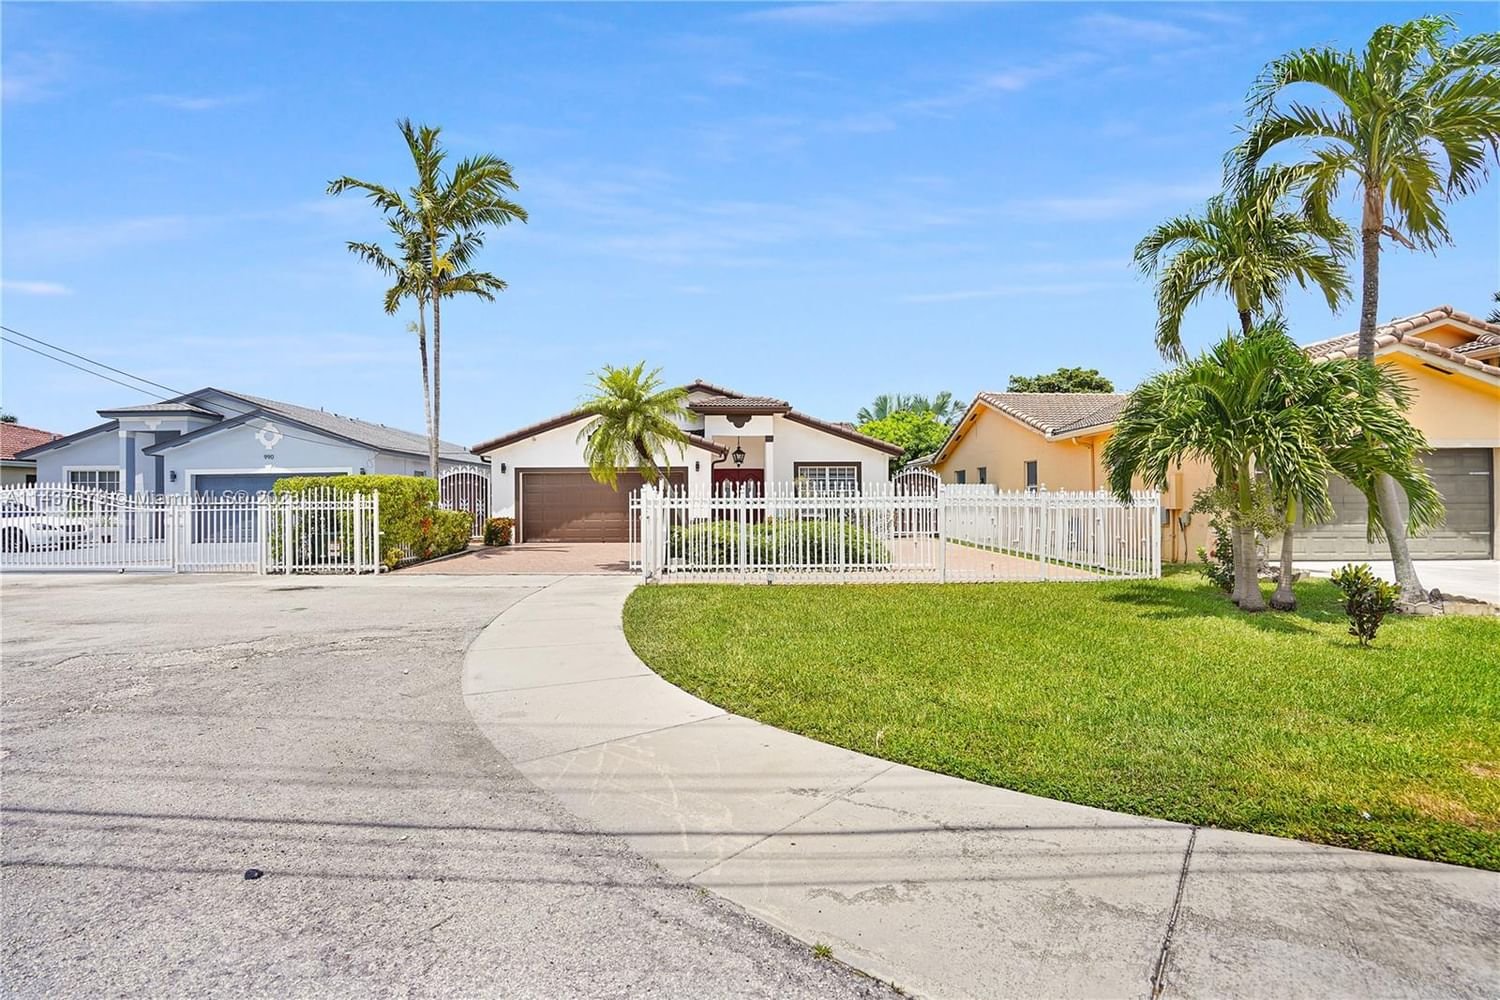 Real estate property located at 1000 127th Ave, Miami-Dade County, Miami, FL